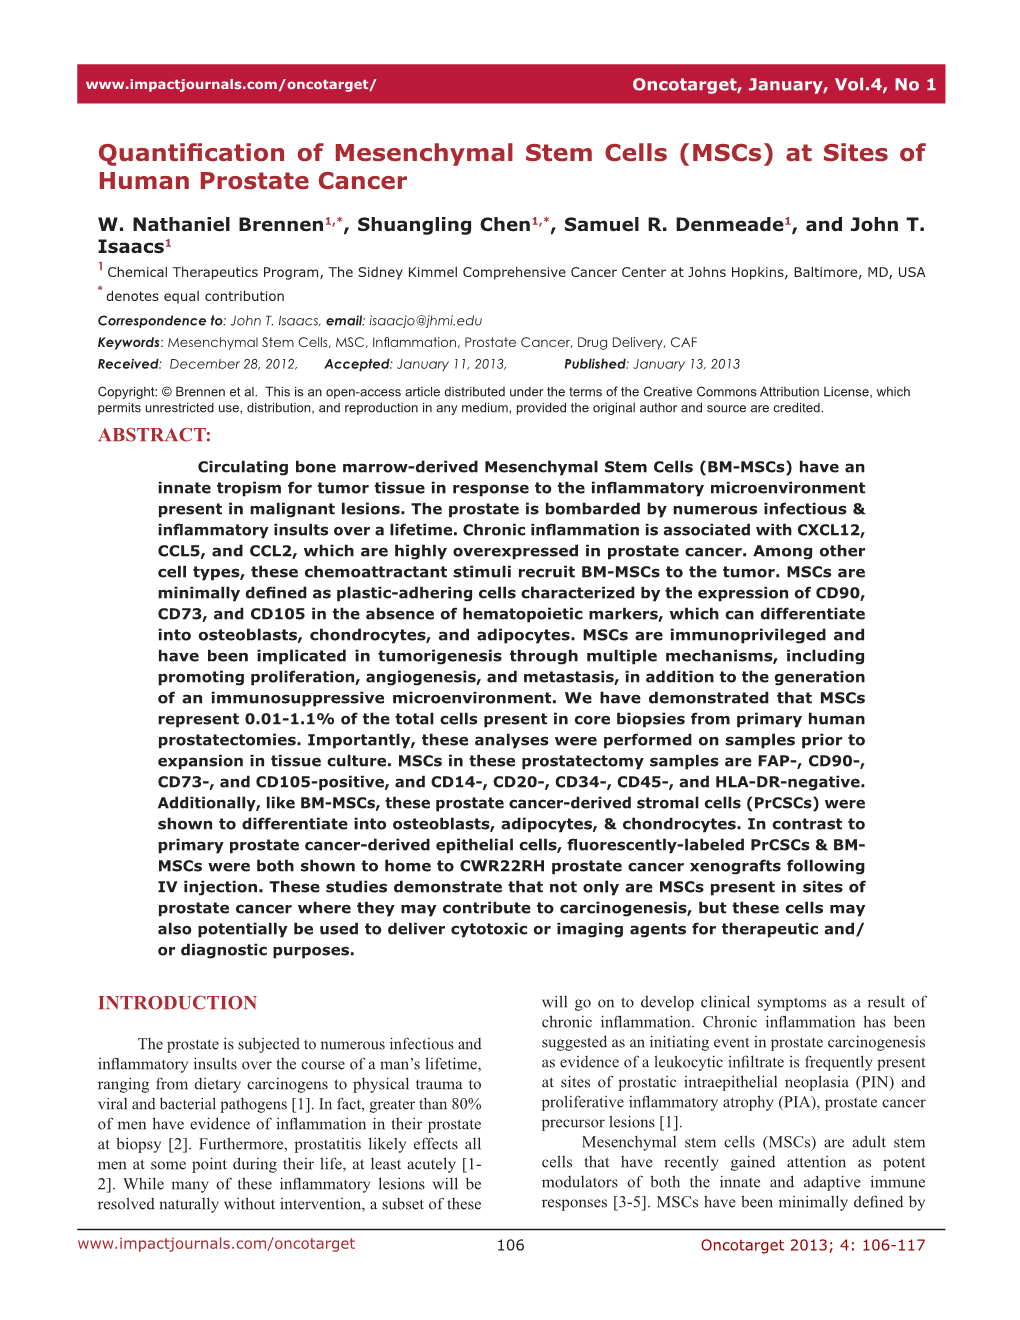 Quantification of Mesenchymal Stem Cells (Mscs) at Sites of Human Prostate Cancer